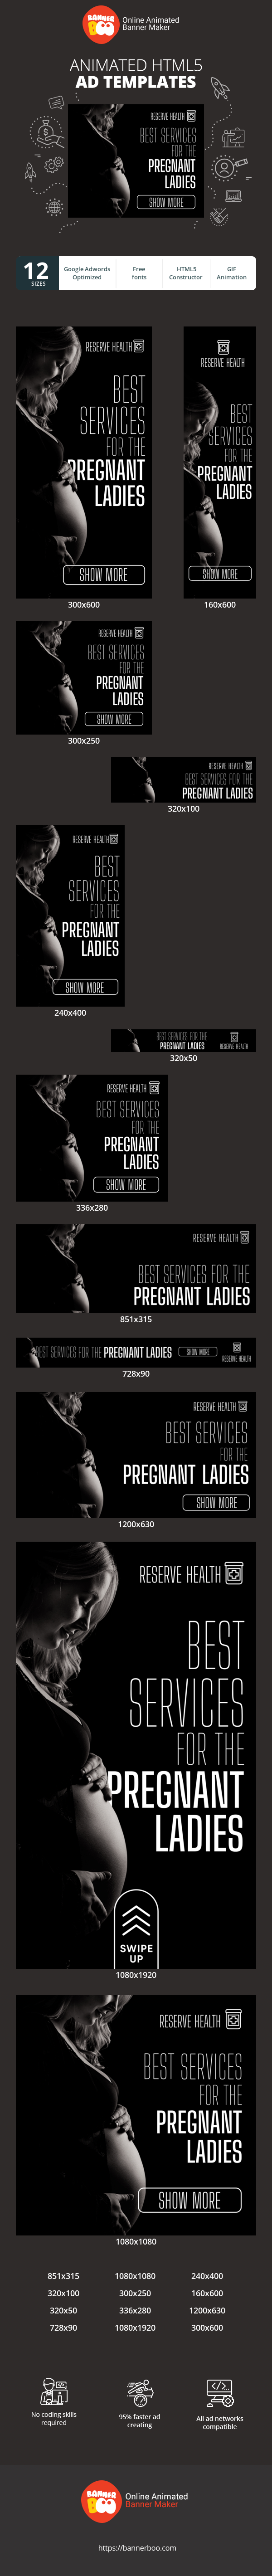 Szablon reklamy banerowej — Best Services For The Pregnant Ladies — Medicine